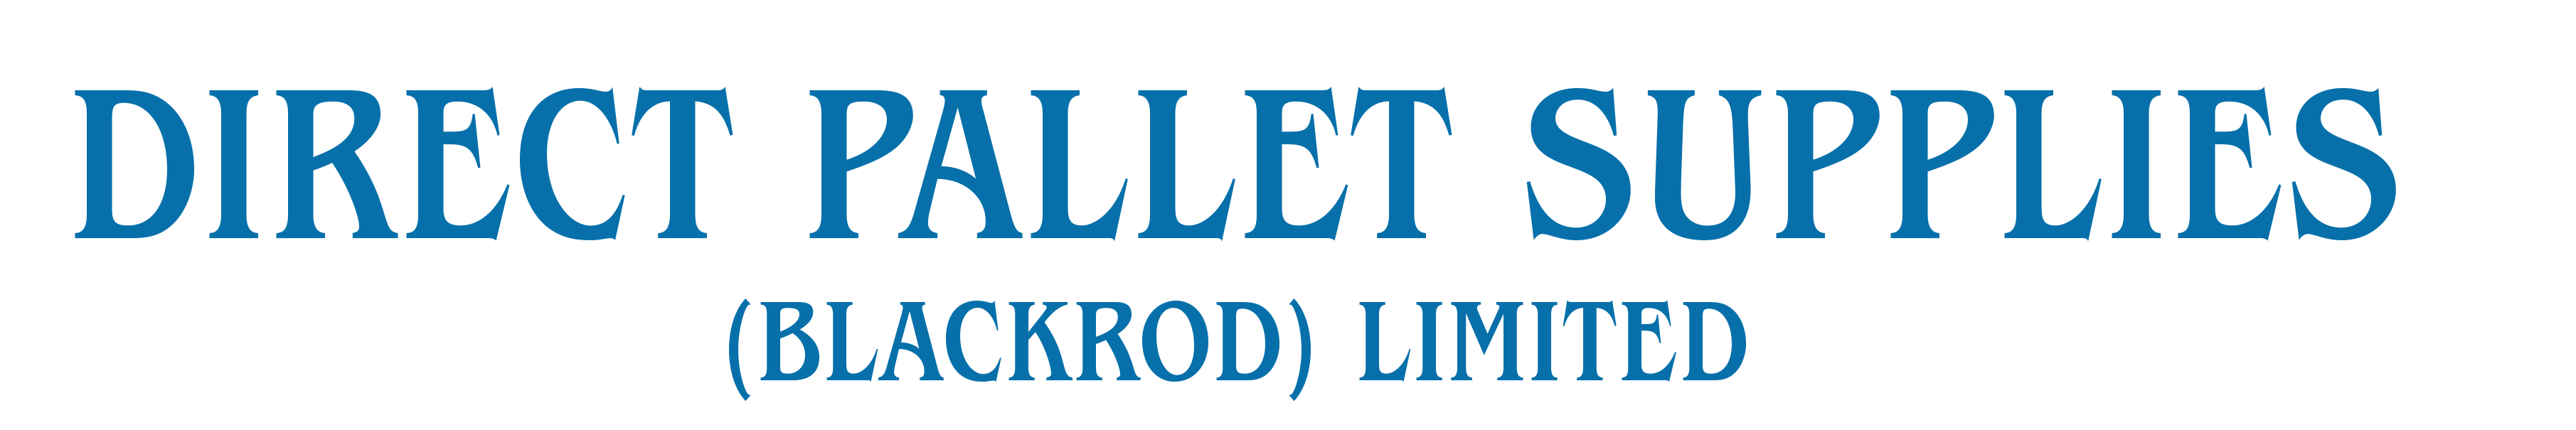 Direct Pallet Supplies logo